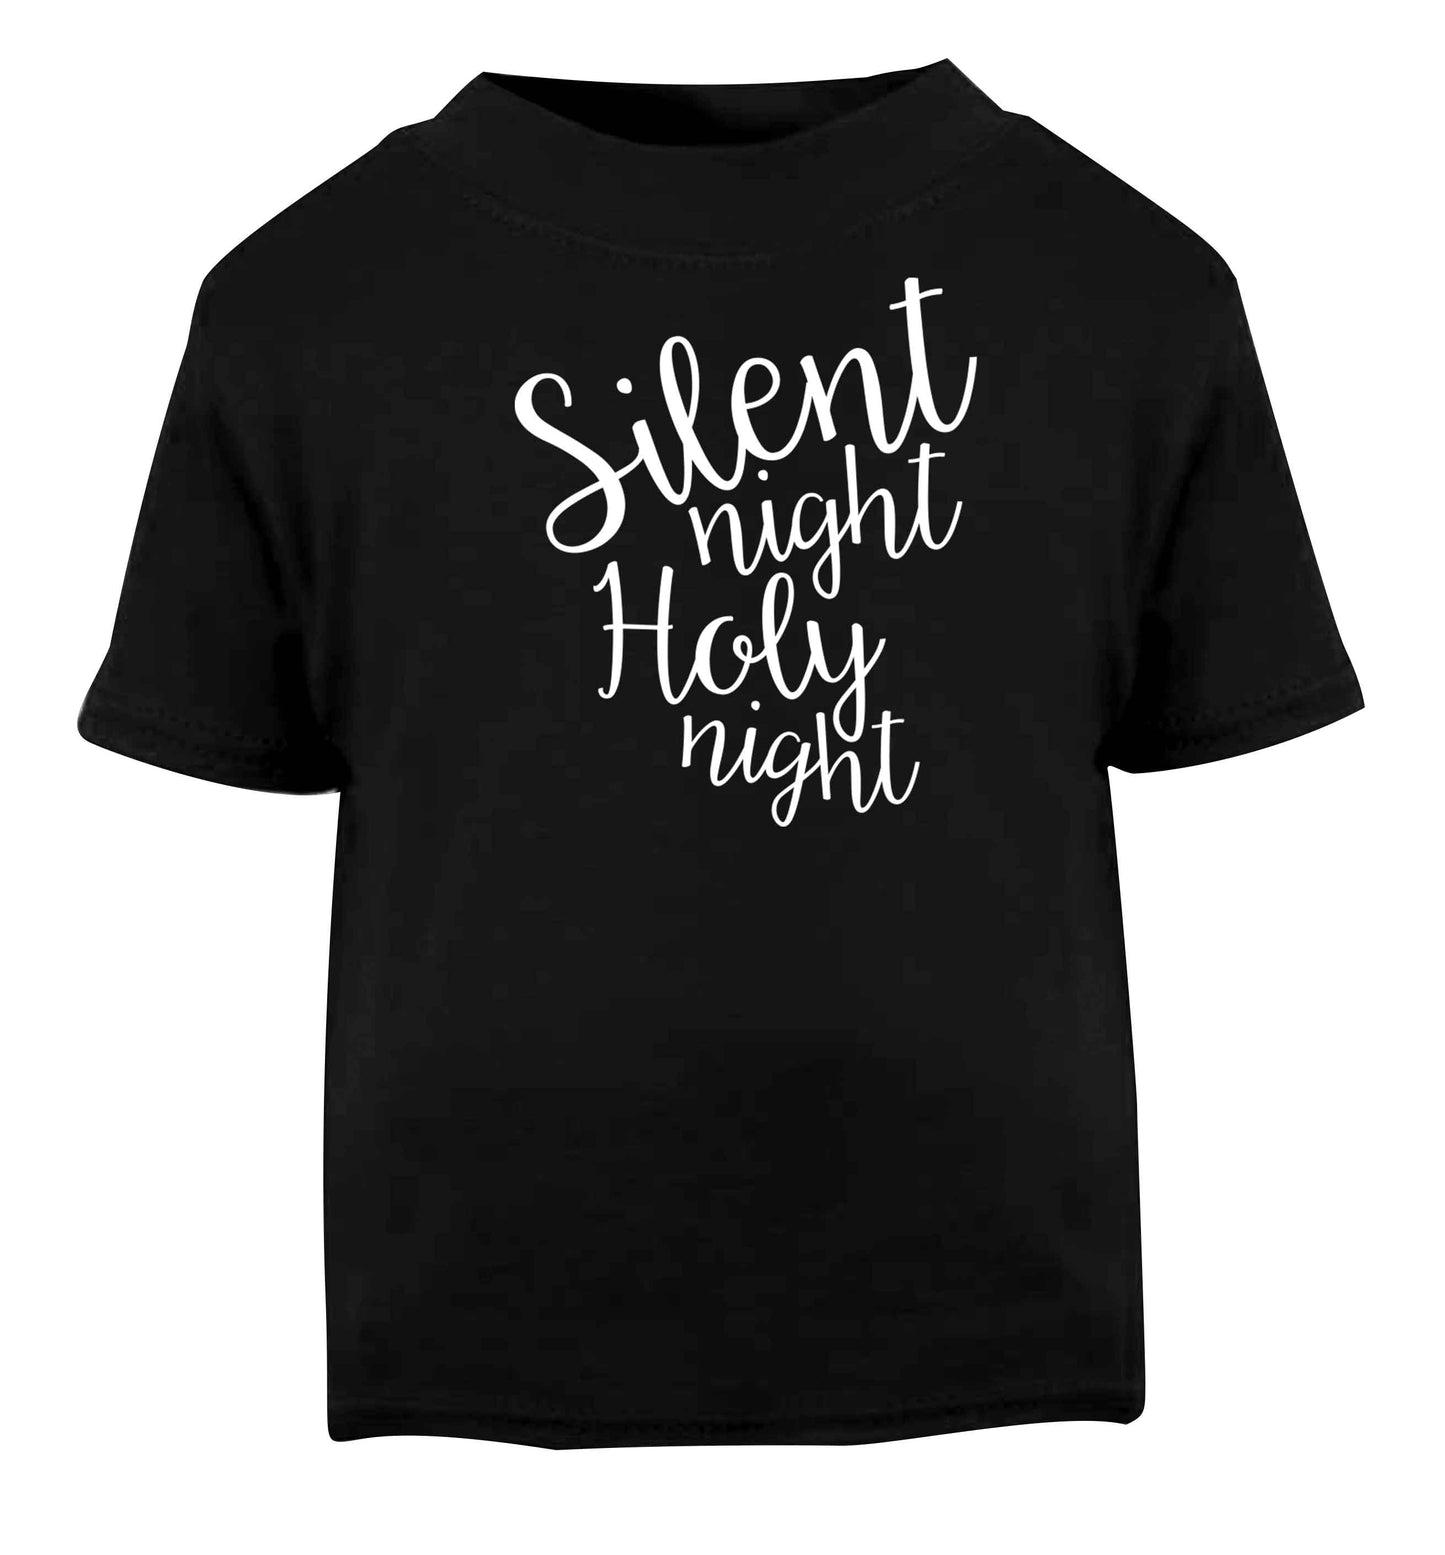 Silent night holy night Black baby toddler Tshirt 2 years